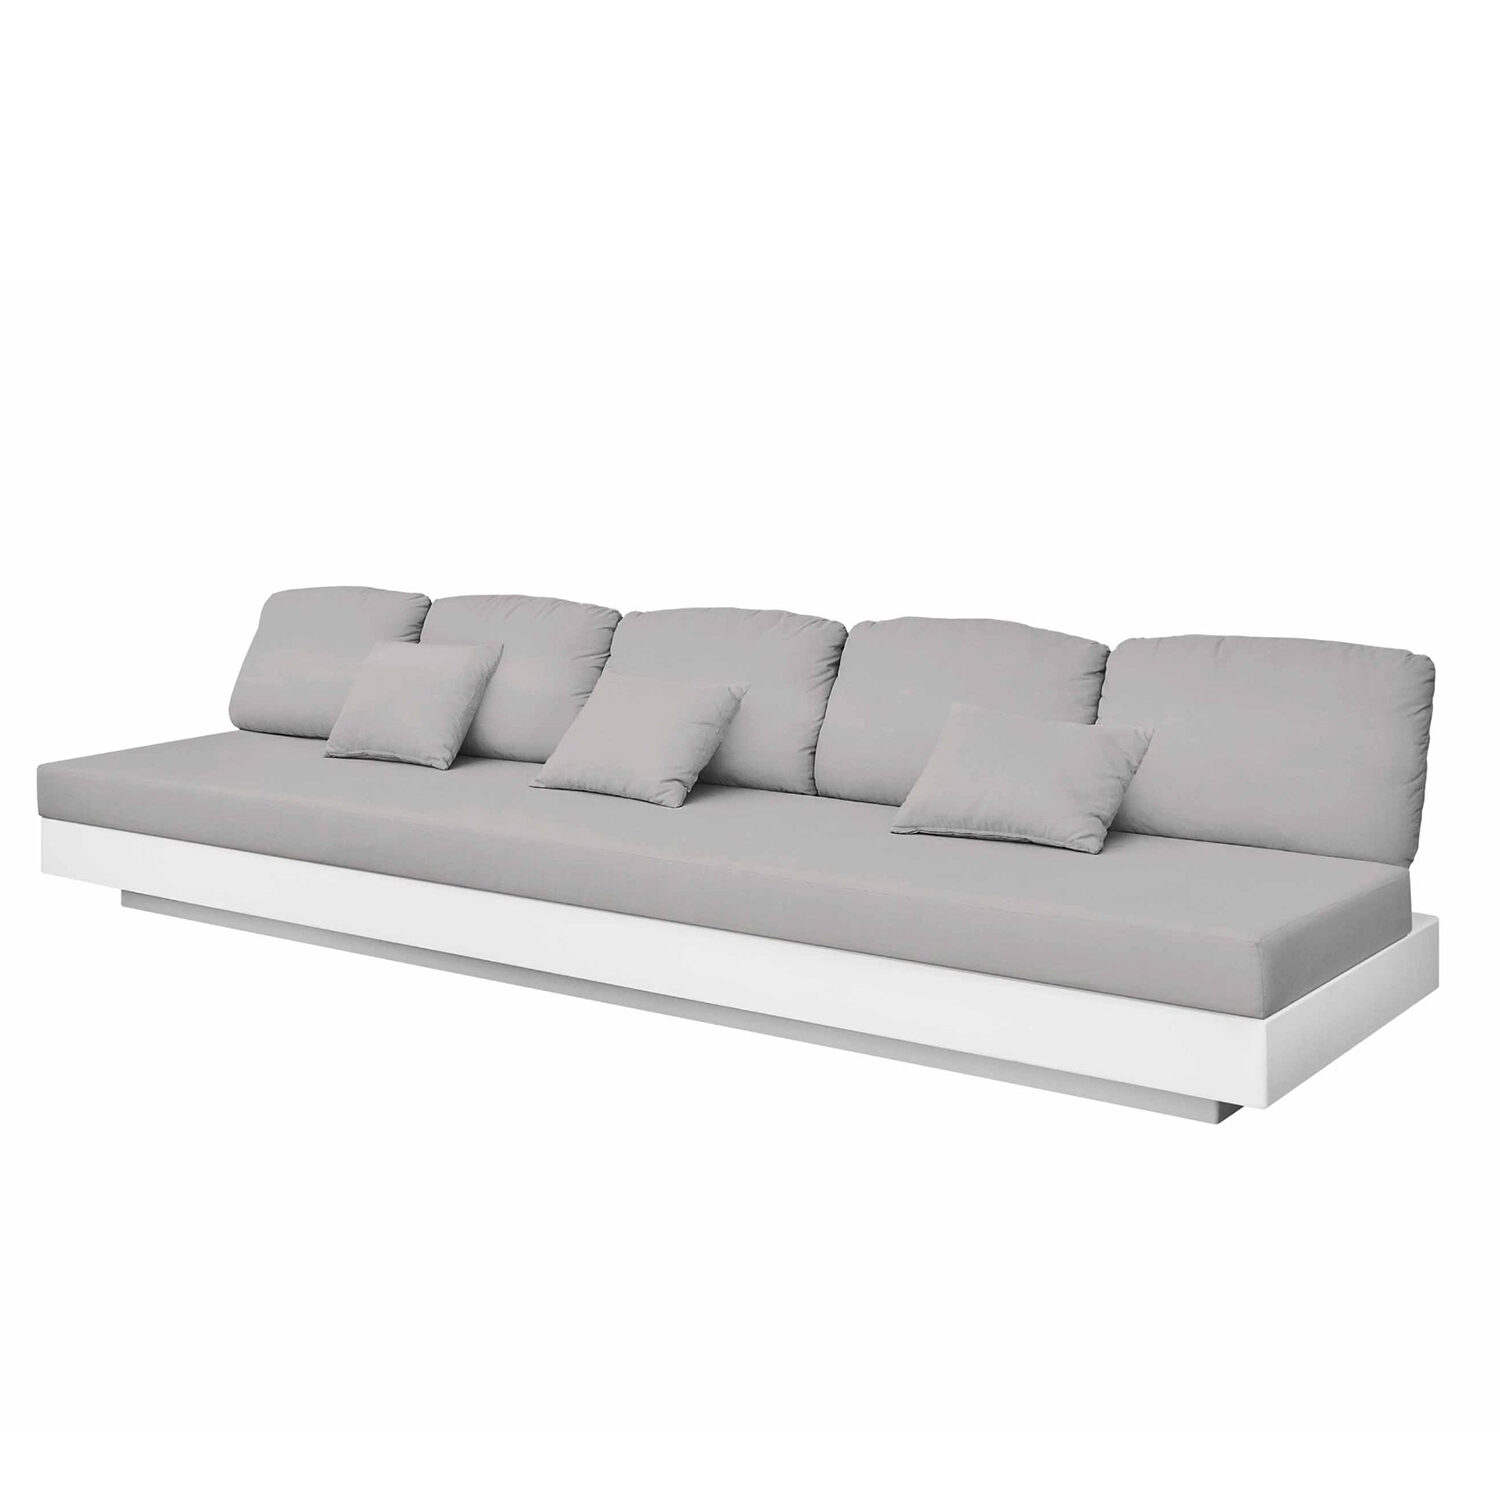 NORDIC modular sofa, 1 to 5 seater